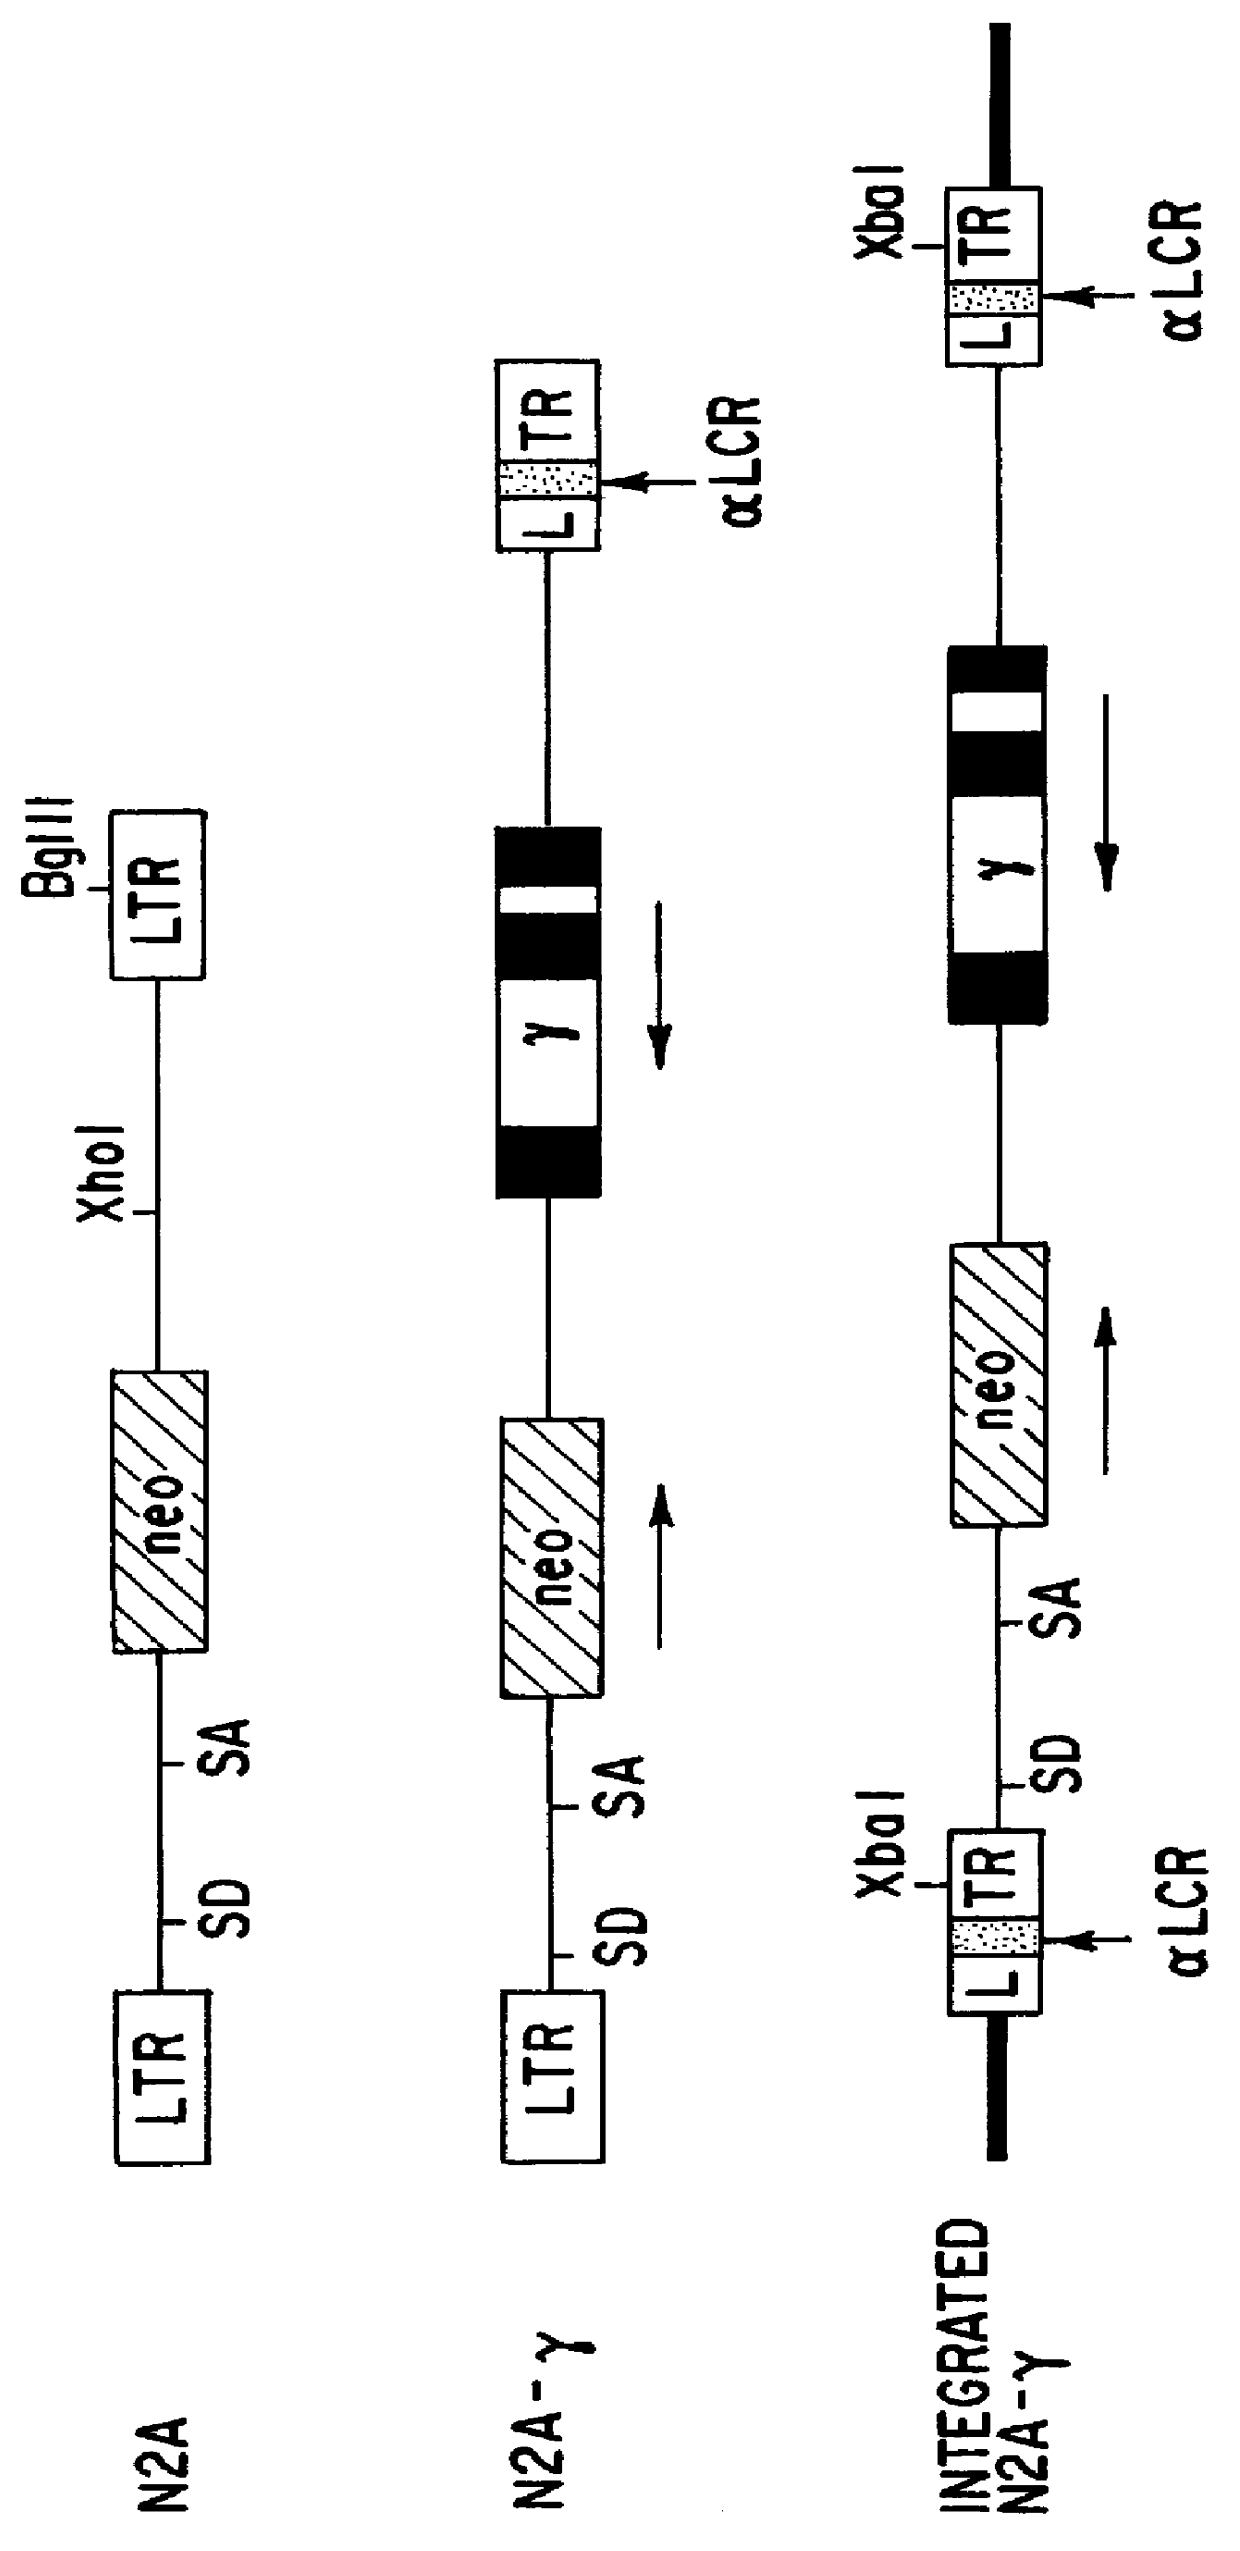 Vectors for expression of globin genes